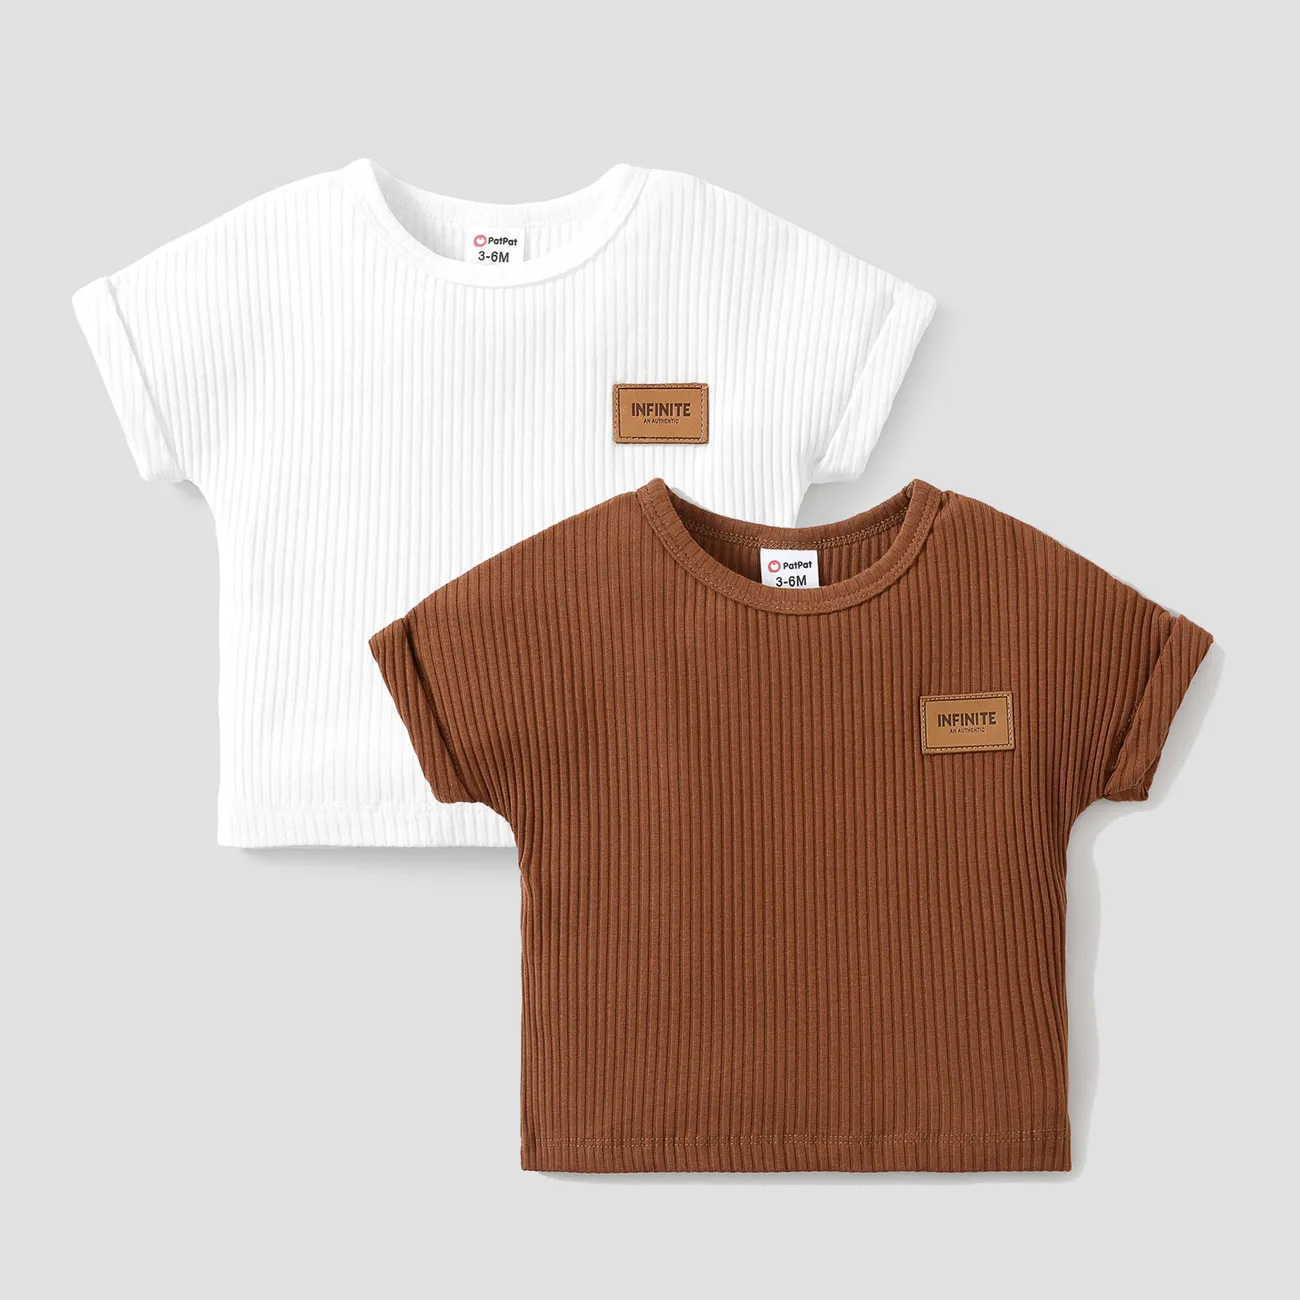 Baby Unisex Lässig Kurzärmelig T-Shirts weiß big image 1